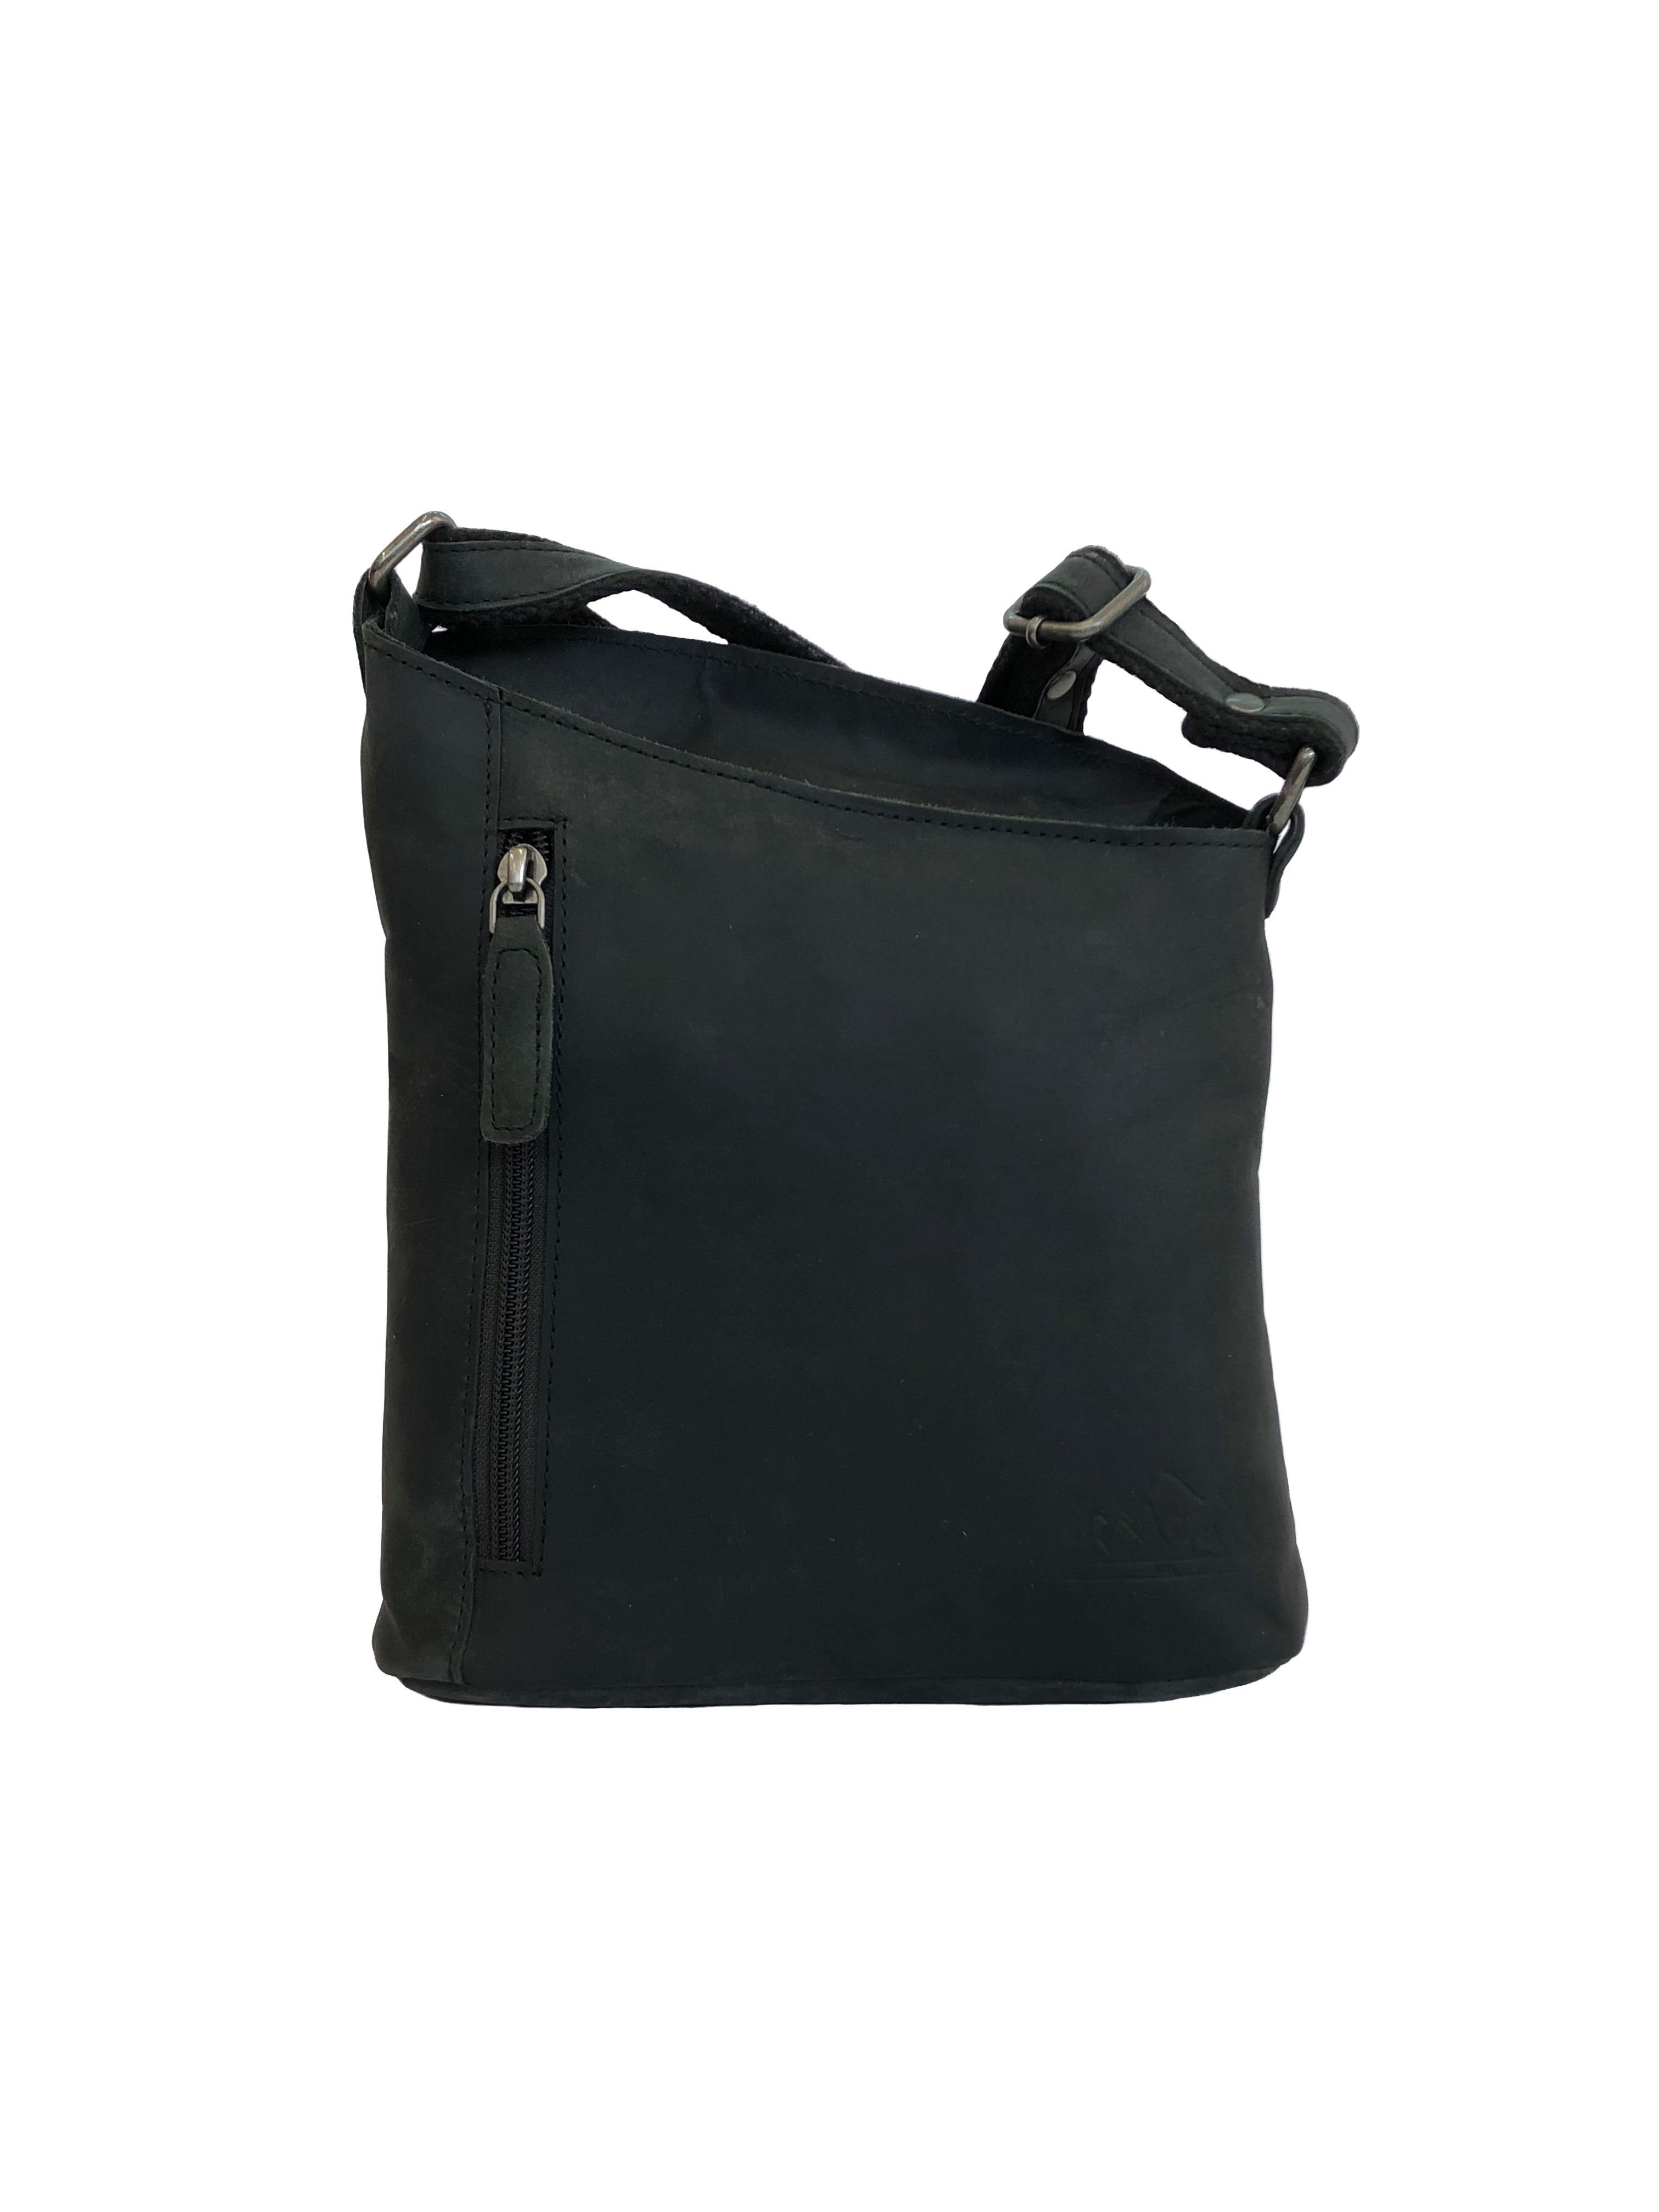 PAULA, Vintage Bag Crossbody Bag Ledertasche Black Umhängetasche Handtasche Bayern